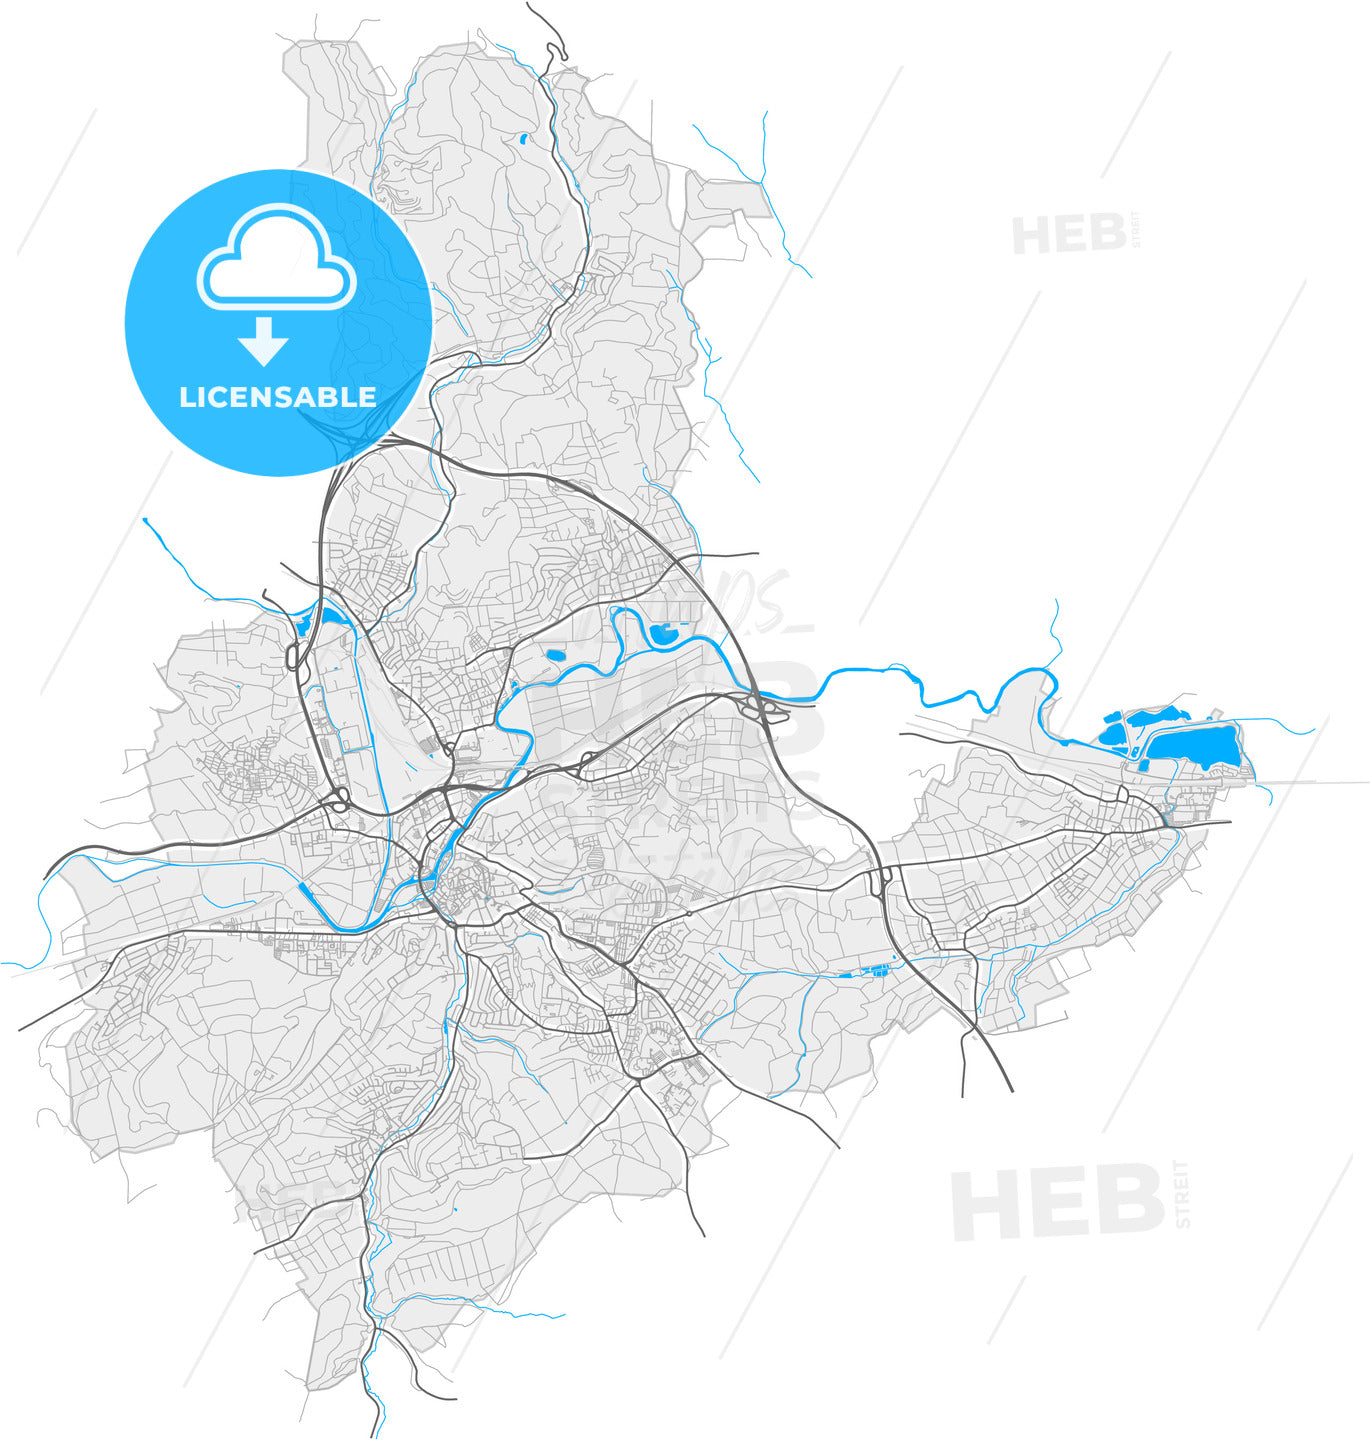 Wetzlar, Hesse, Germany, high quality vector map